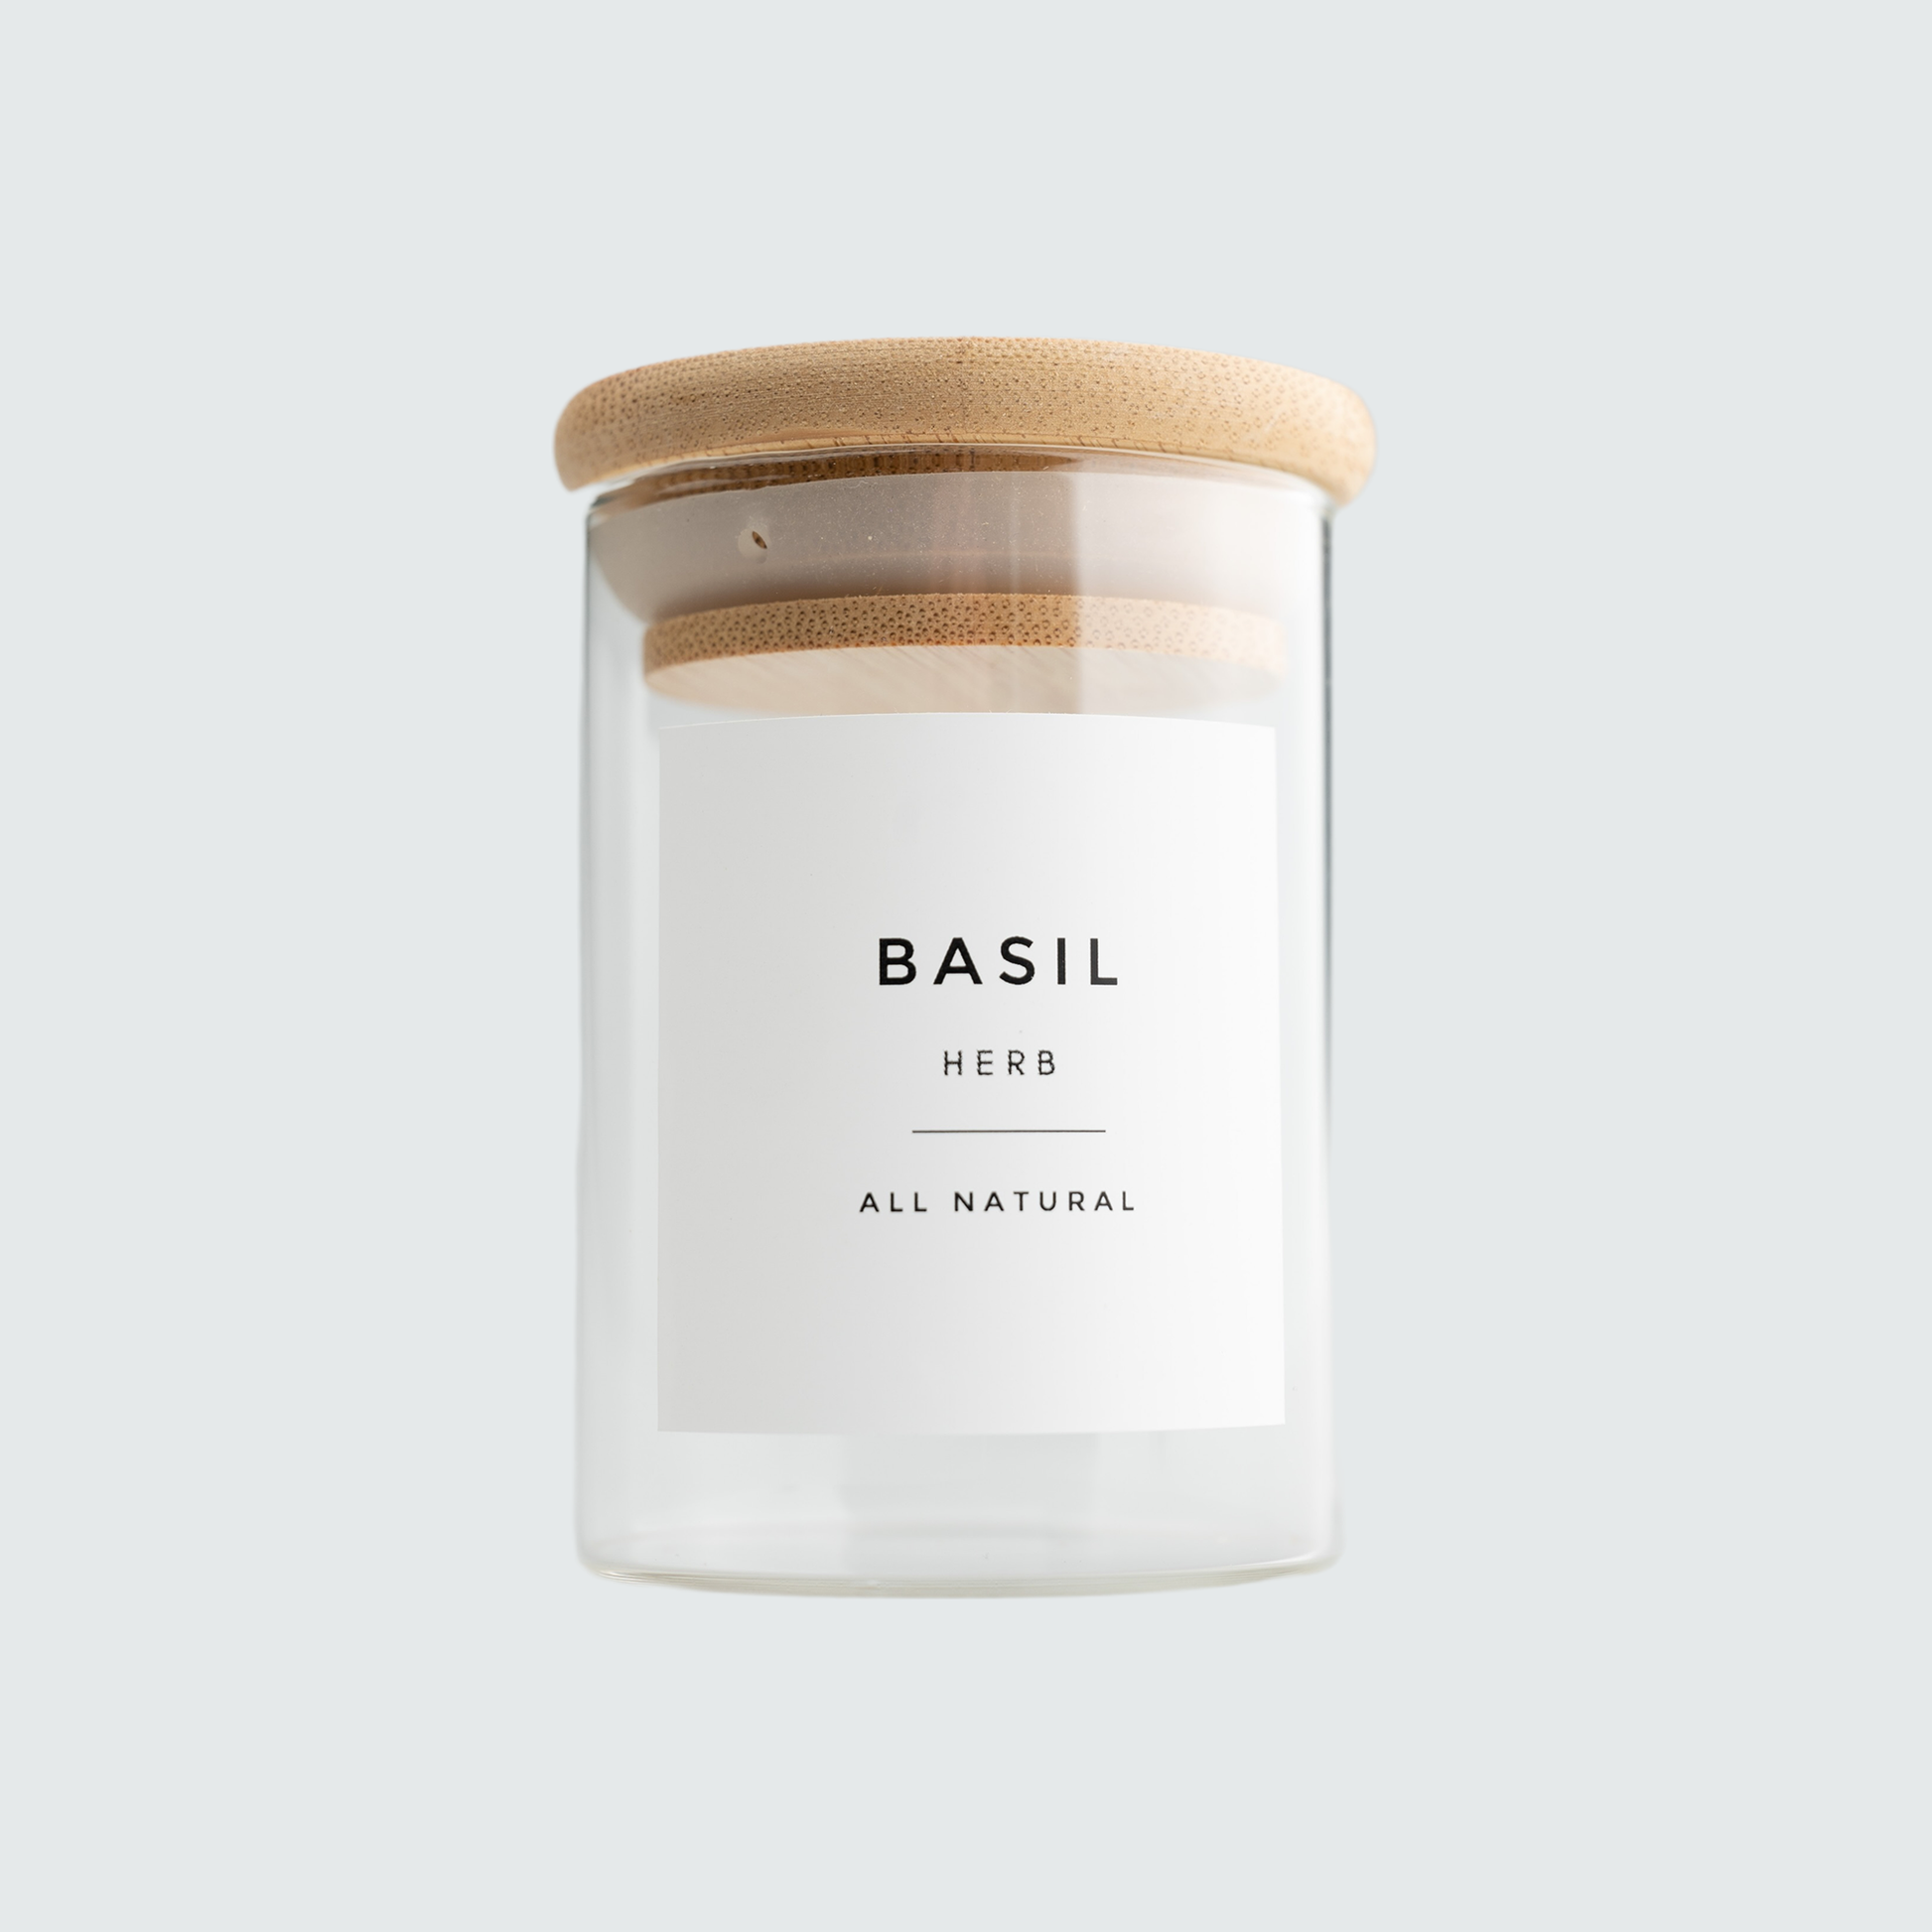 Bamboo Spice Jars, Spice Jar Set, Modern Minimalist Spice Jars